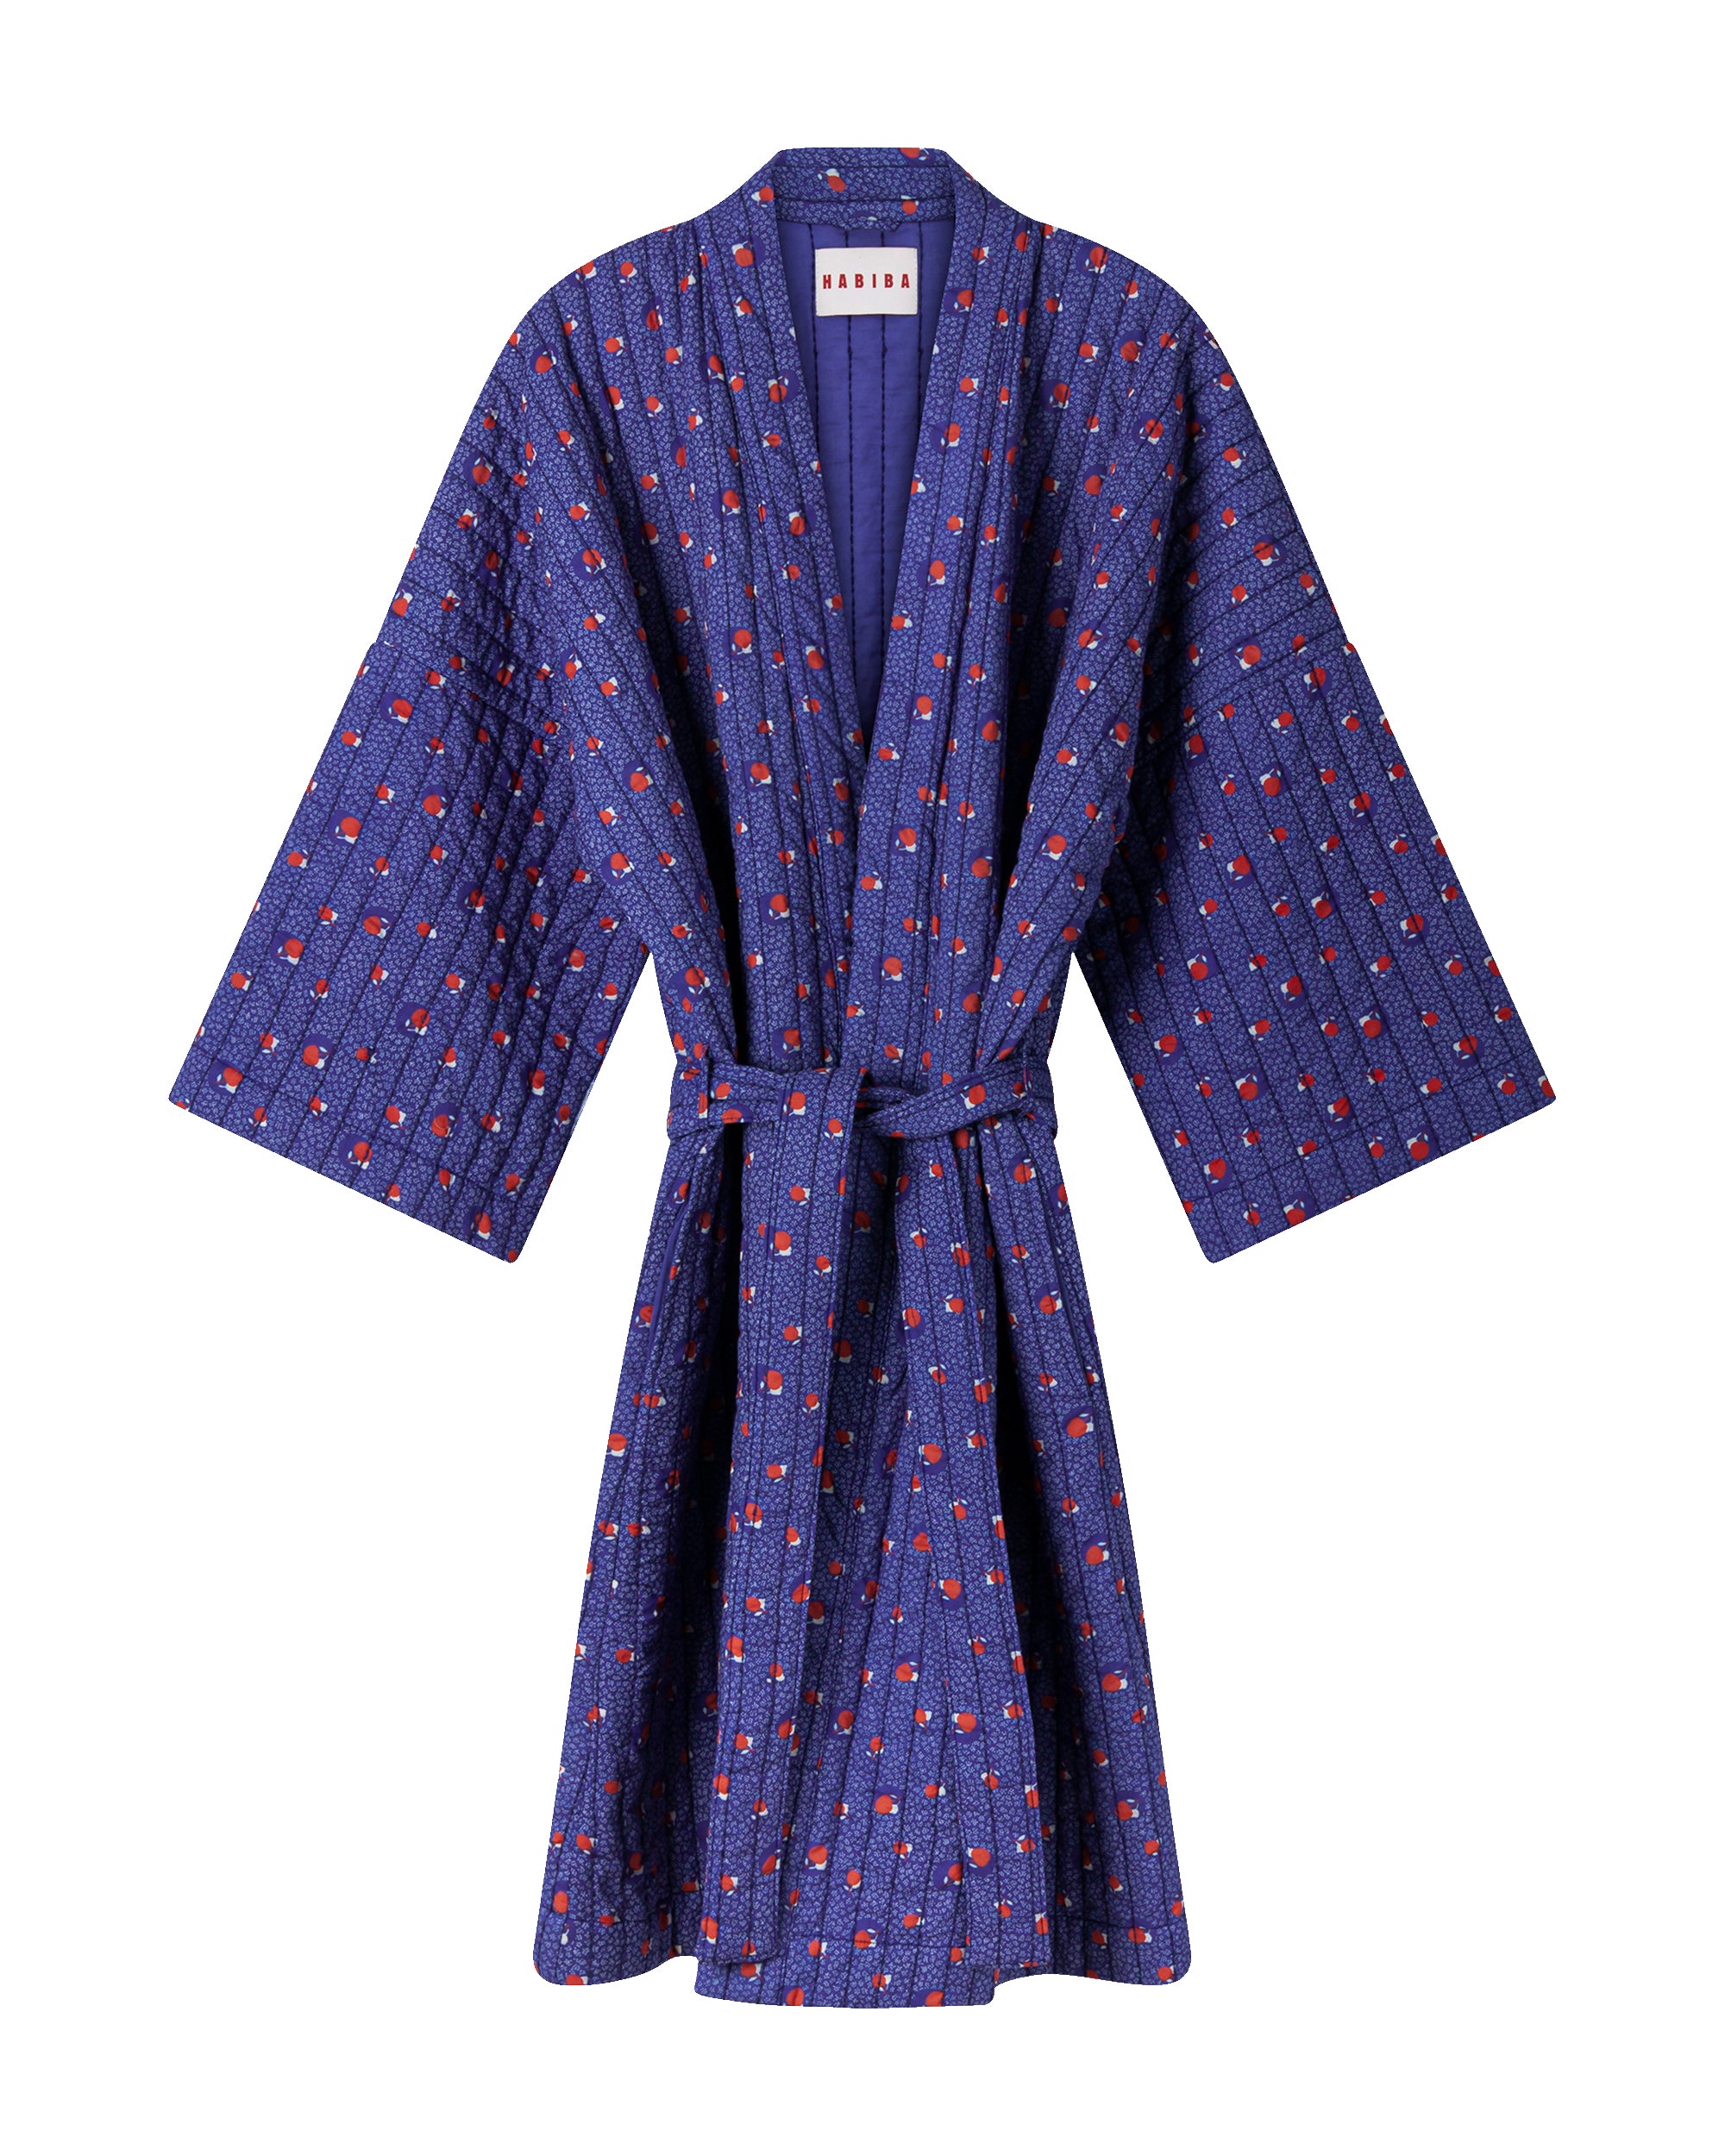 HABIBA SAKURA QUILTED KIMONO Kimono JAPAN BLUE